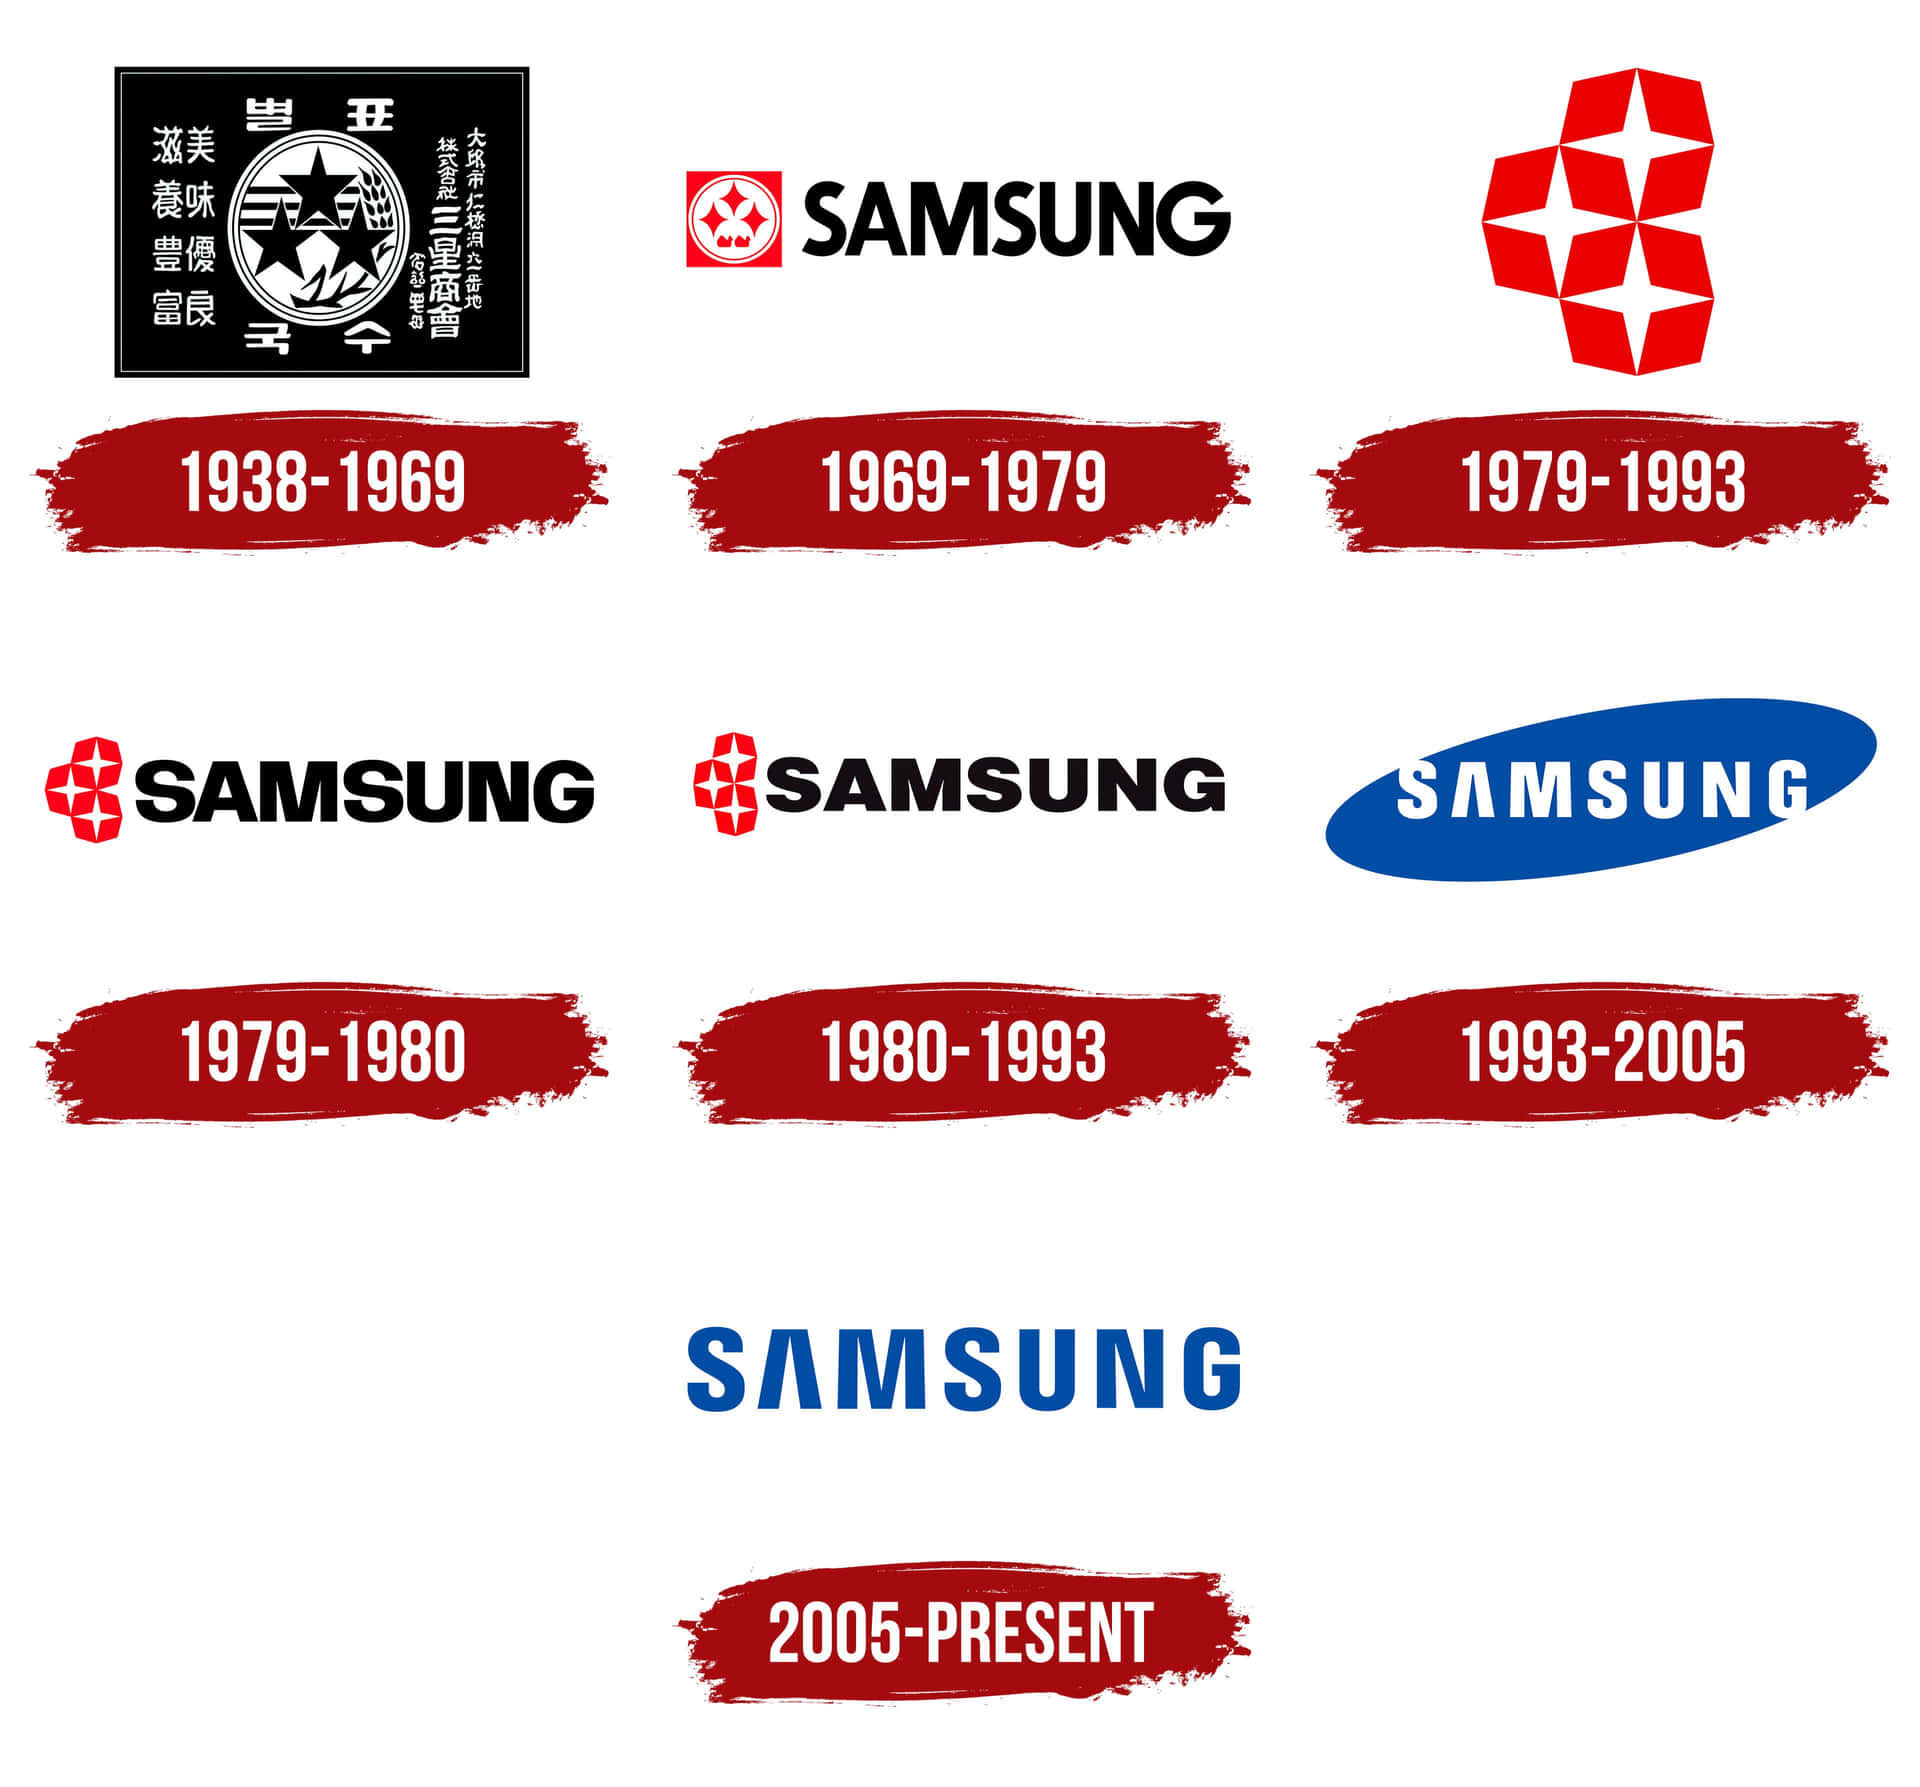 Samsung Logos Billedtapet: Se på Samsungs logoer på dette moderne tapet.